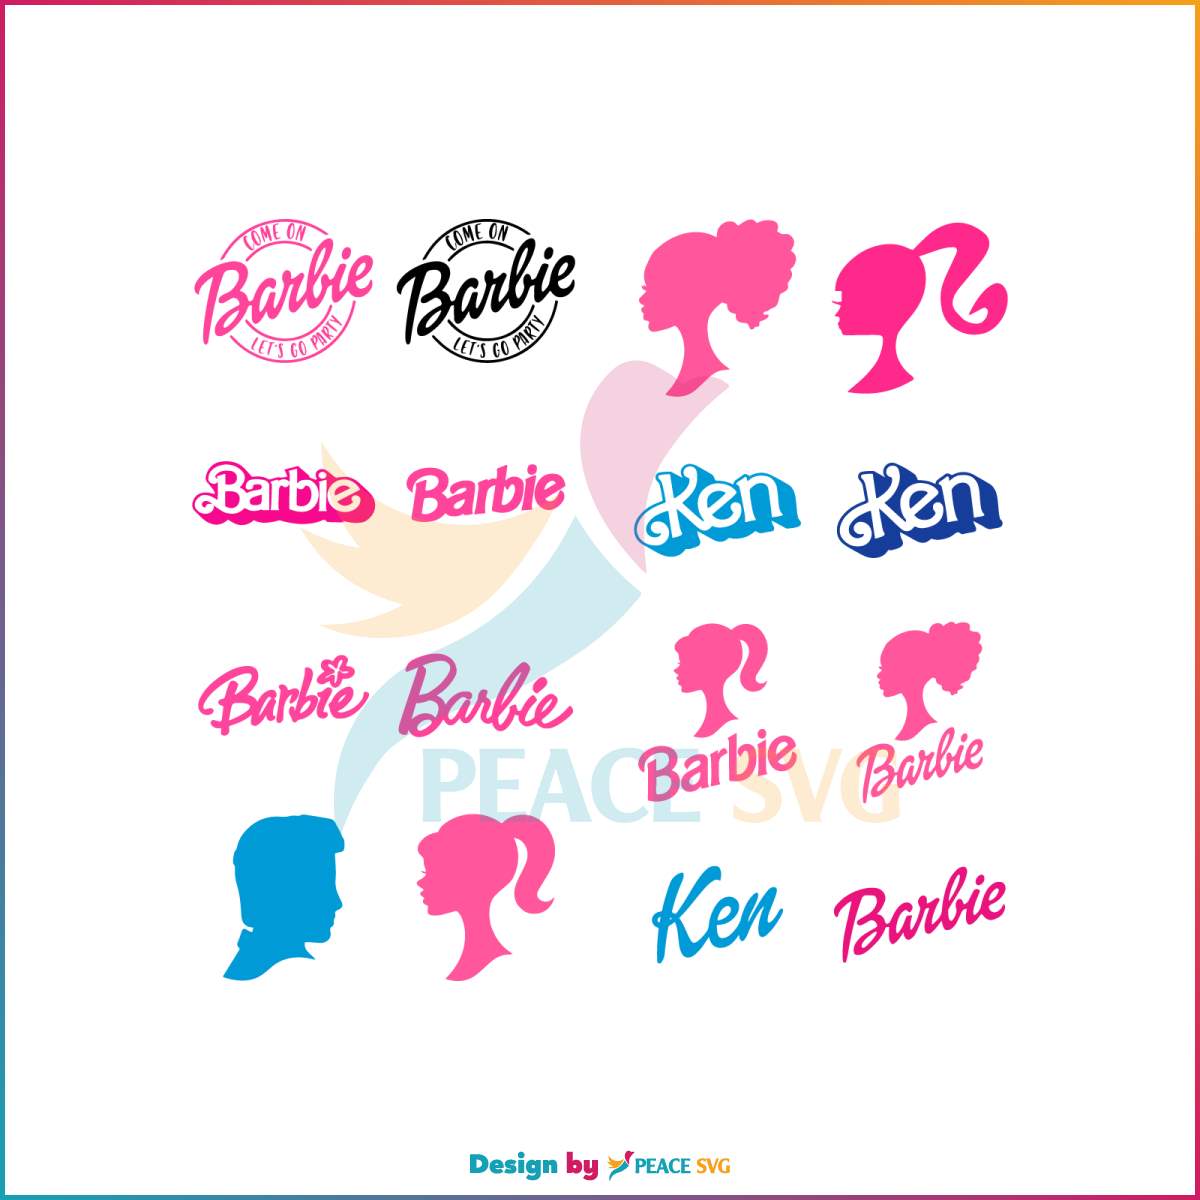 barbie-and-ken-come-on-barbie-lets-go-party-svg-bundle-file